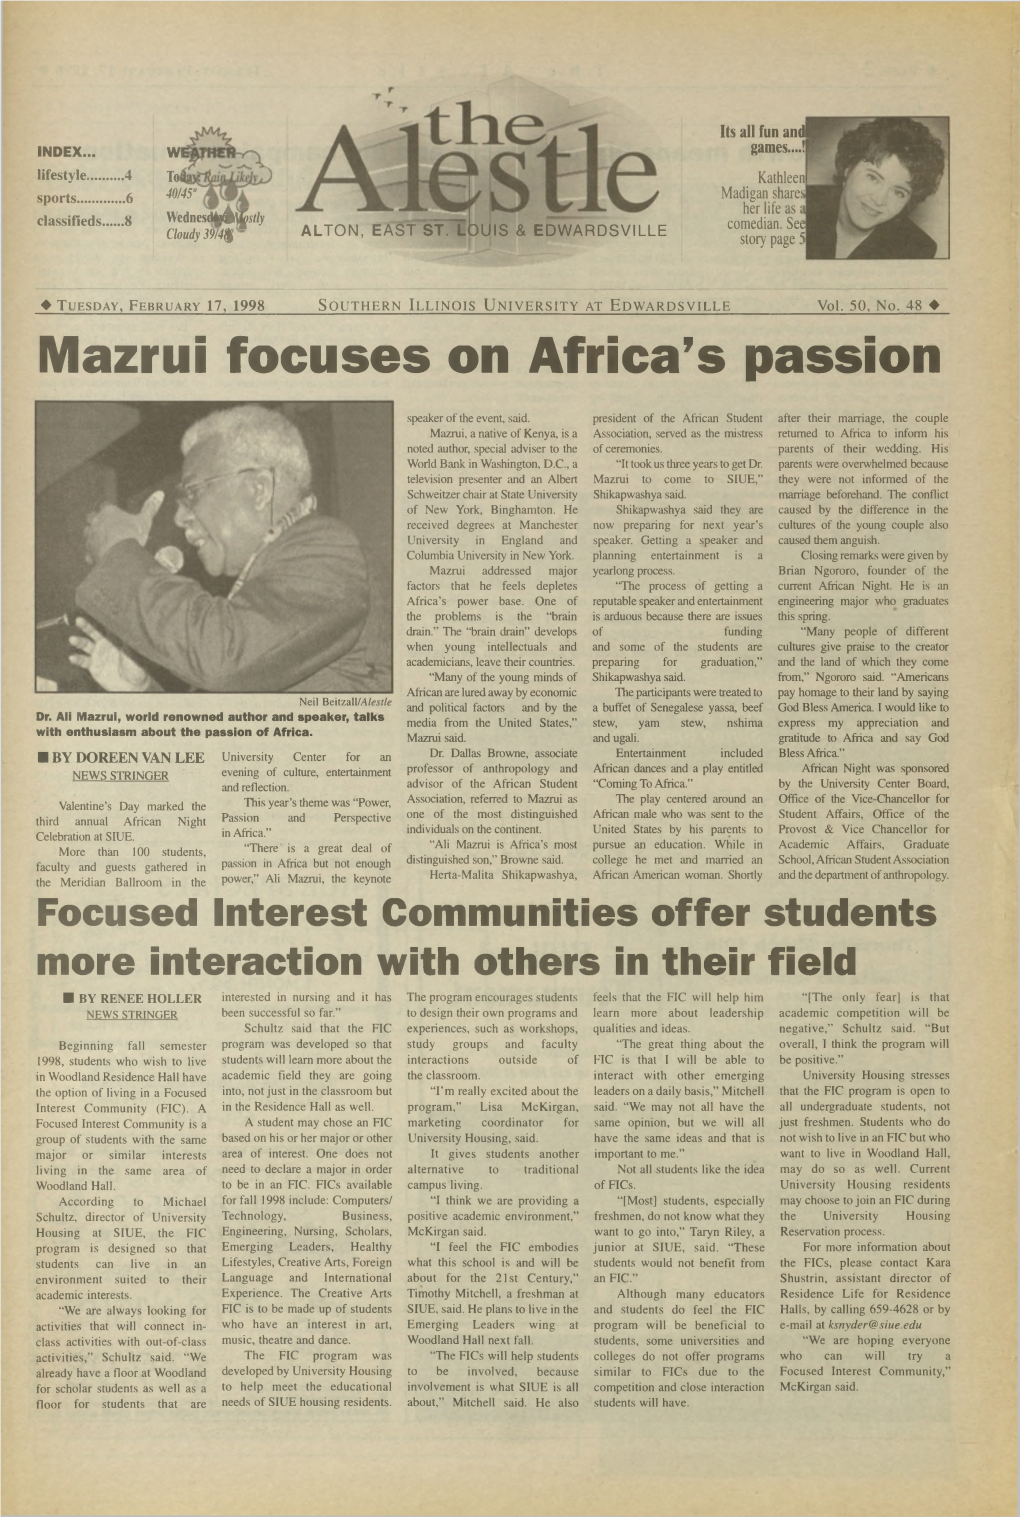 Mazrui Focuses on Africa's Passion